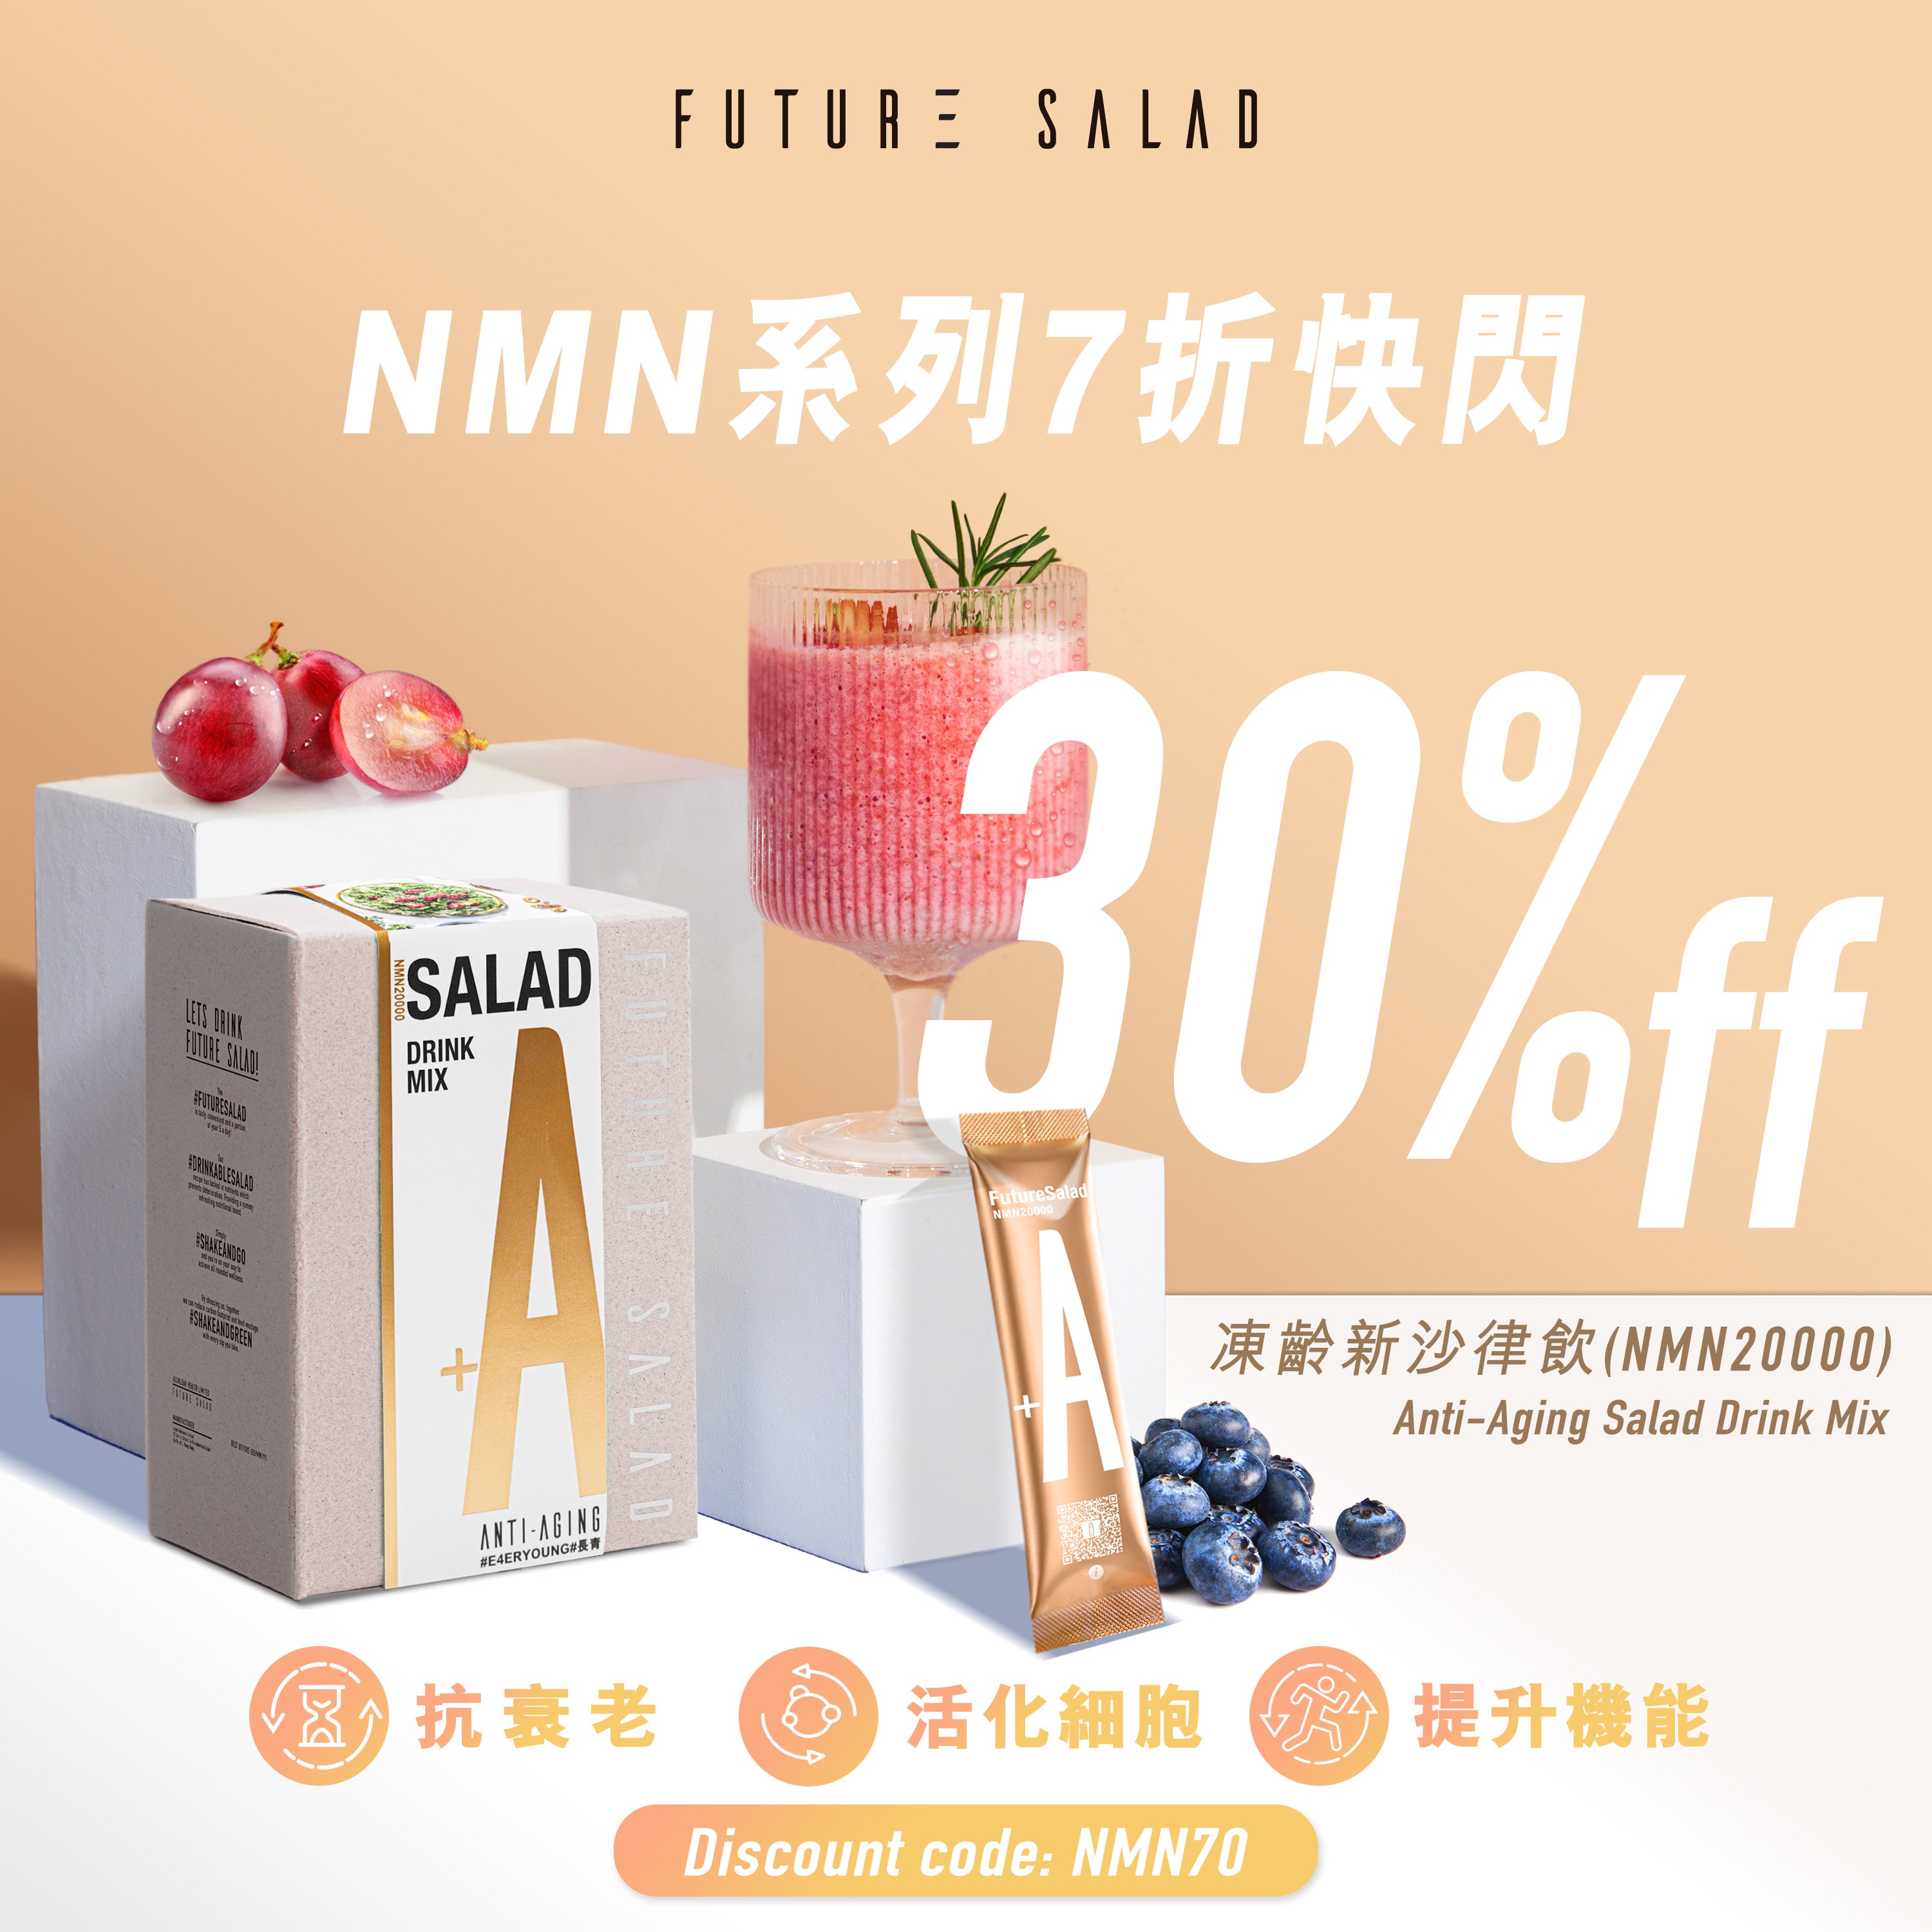 【2024年5月到期】凍齡新沙律飲 (NMN20000) Anti-Aging Salad Drink Mix 30包裝 #長青 #FOREVERYOUNG